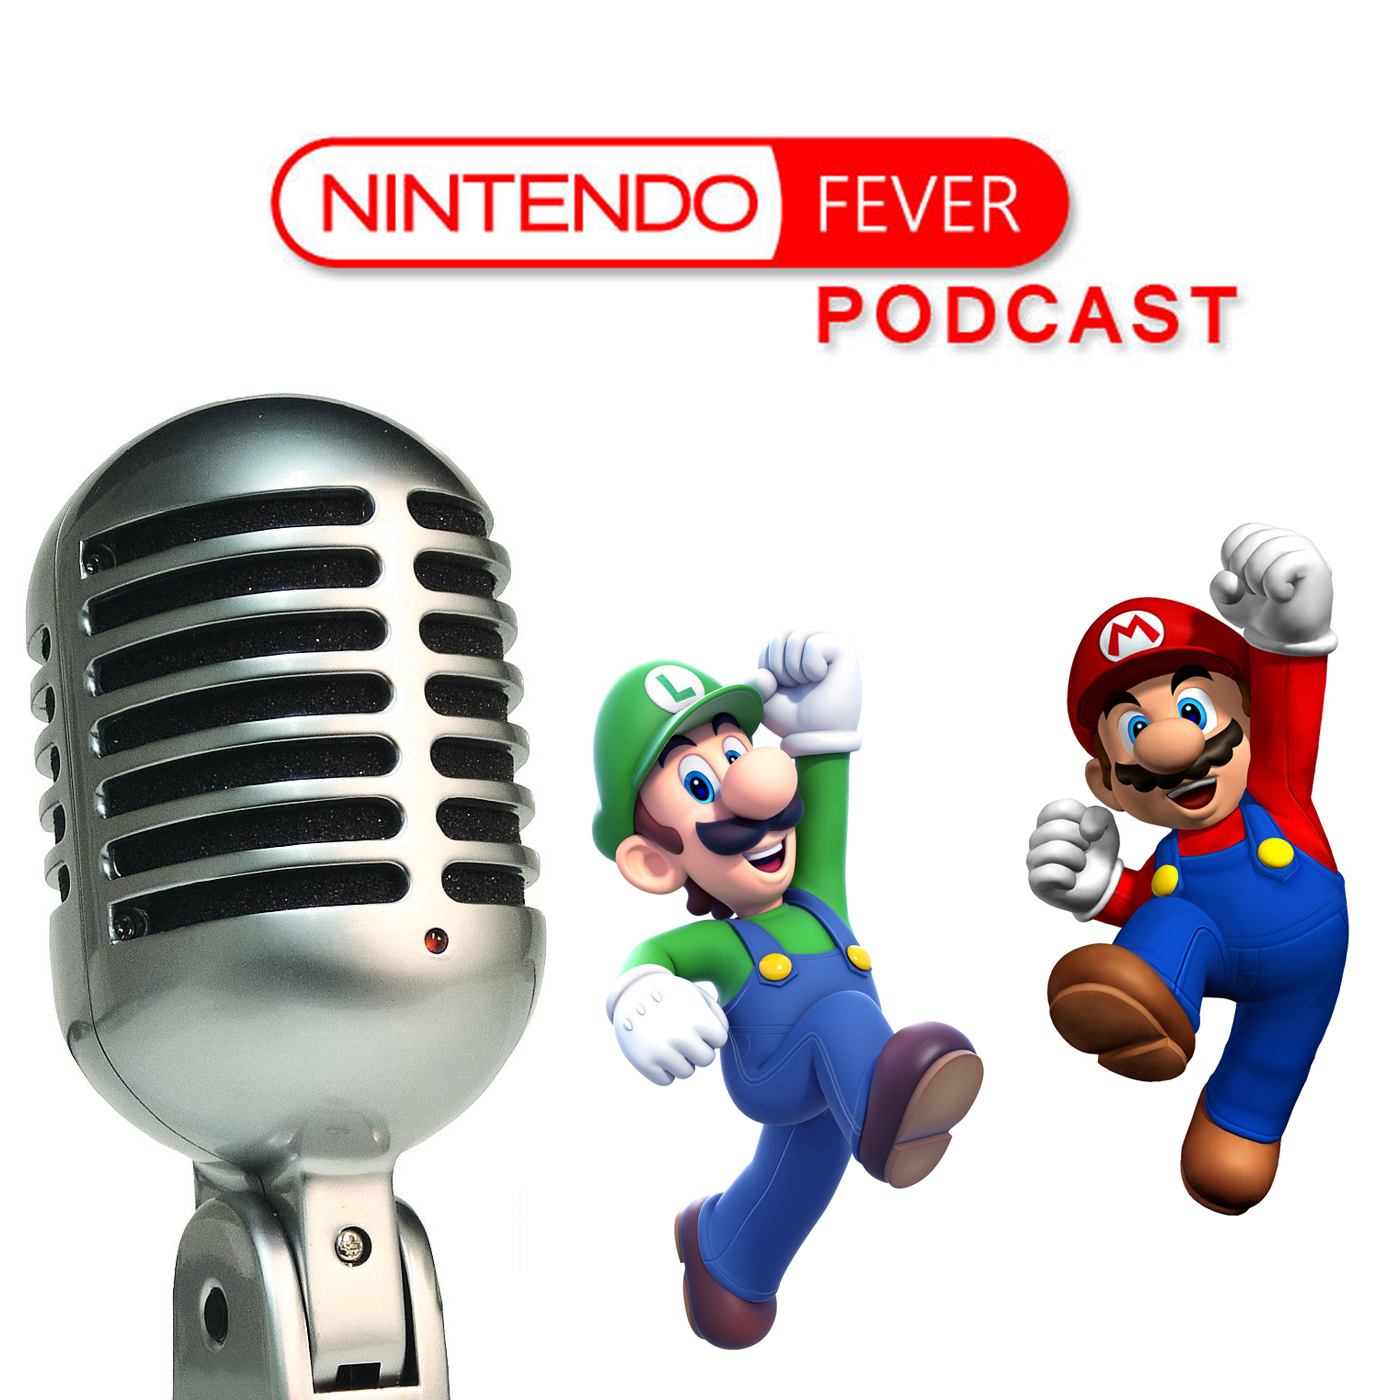 NintendoFever Podcast Episode 101: Party Games